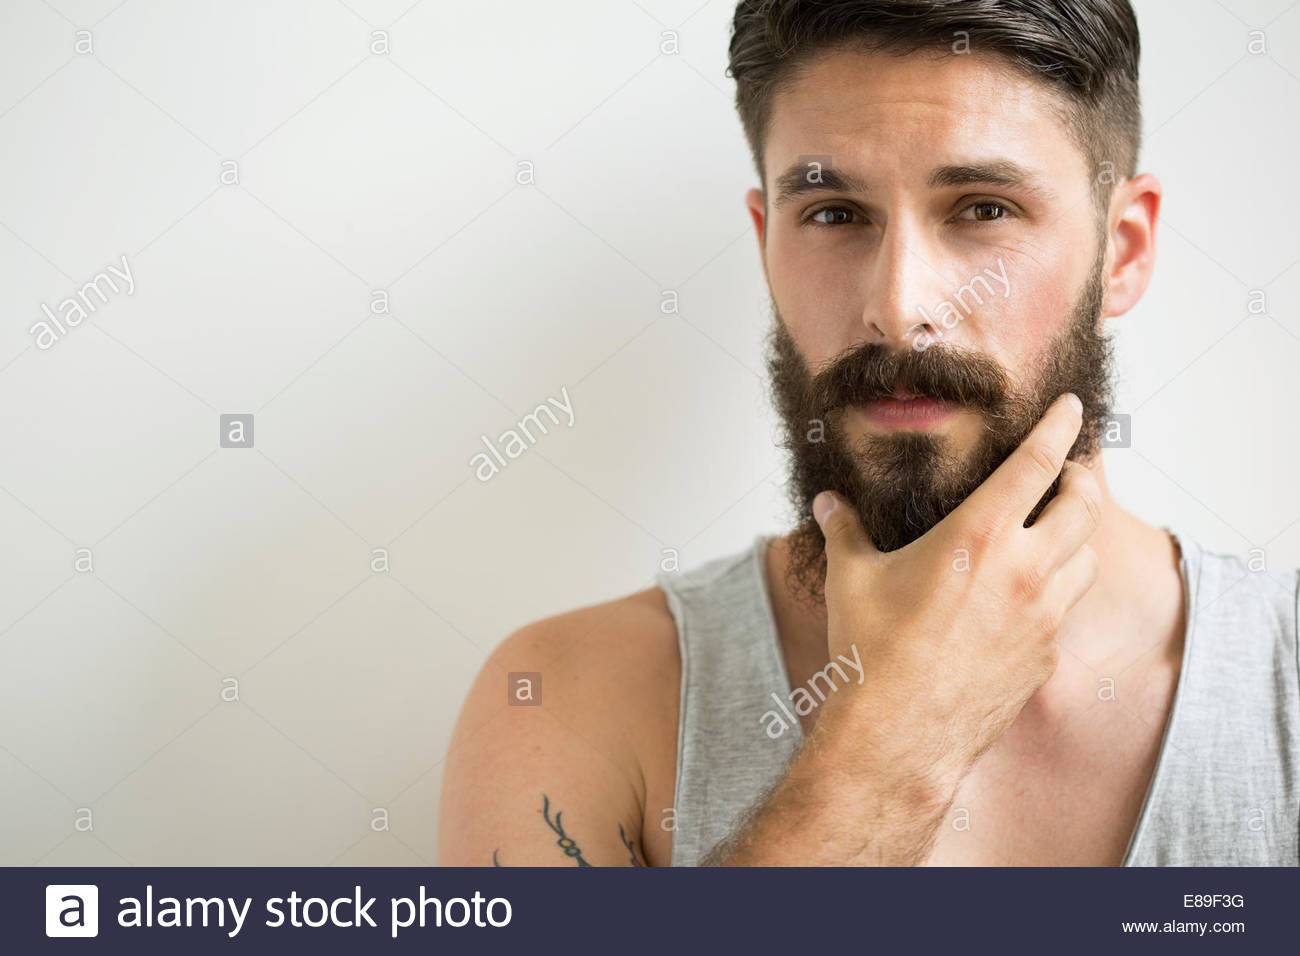 Close up portrait of serious man rubbing beard Stock Photo